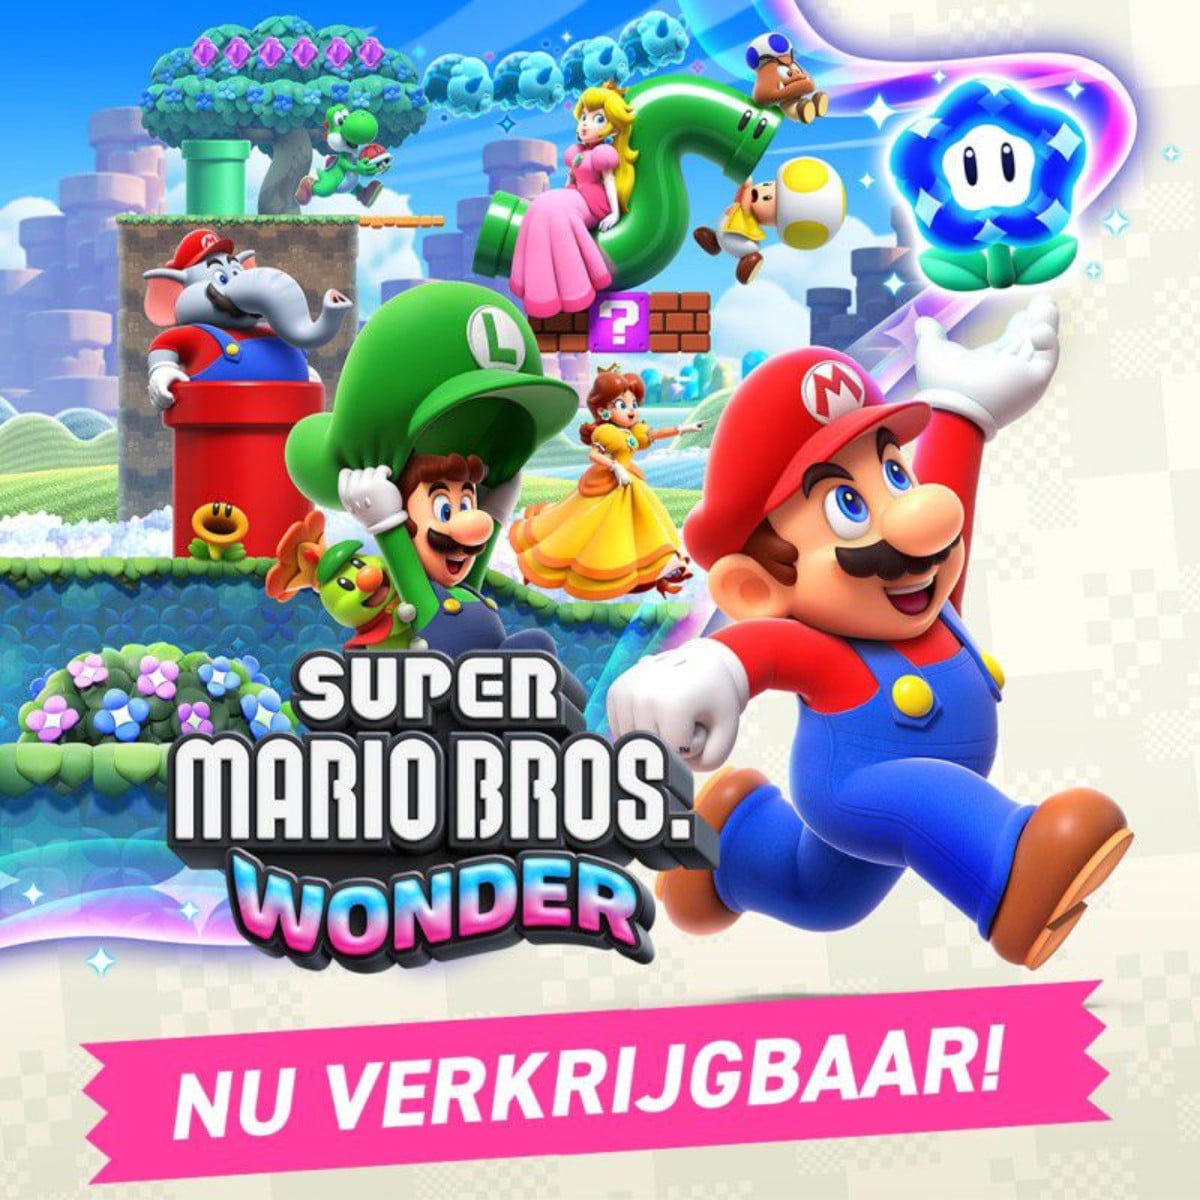 Super Mario Bros Wonder game switch nintendo